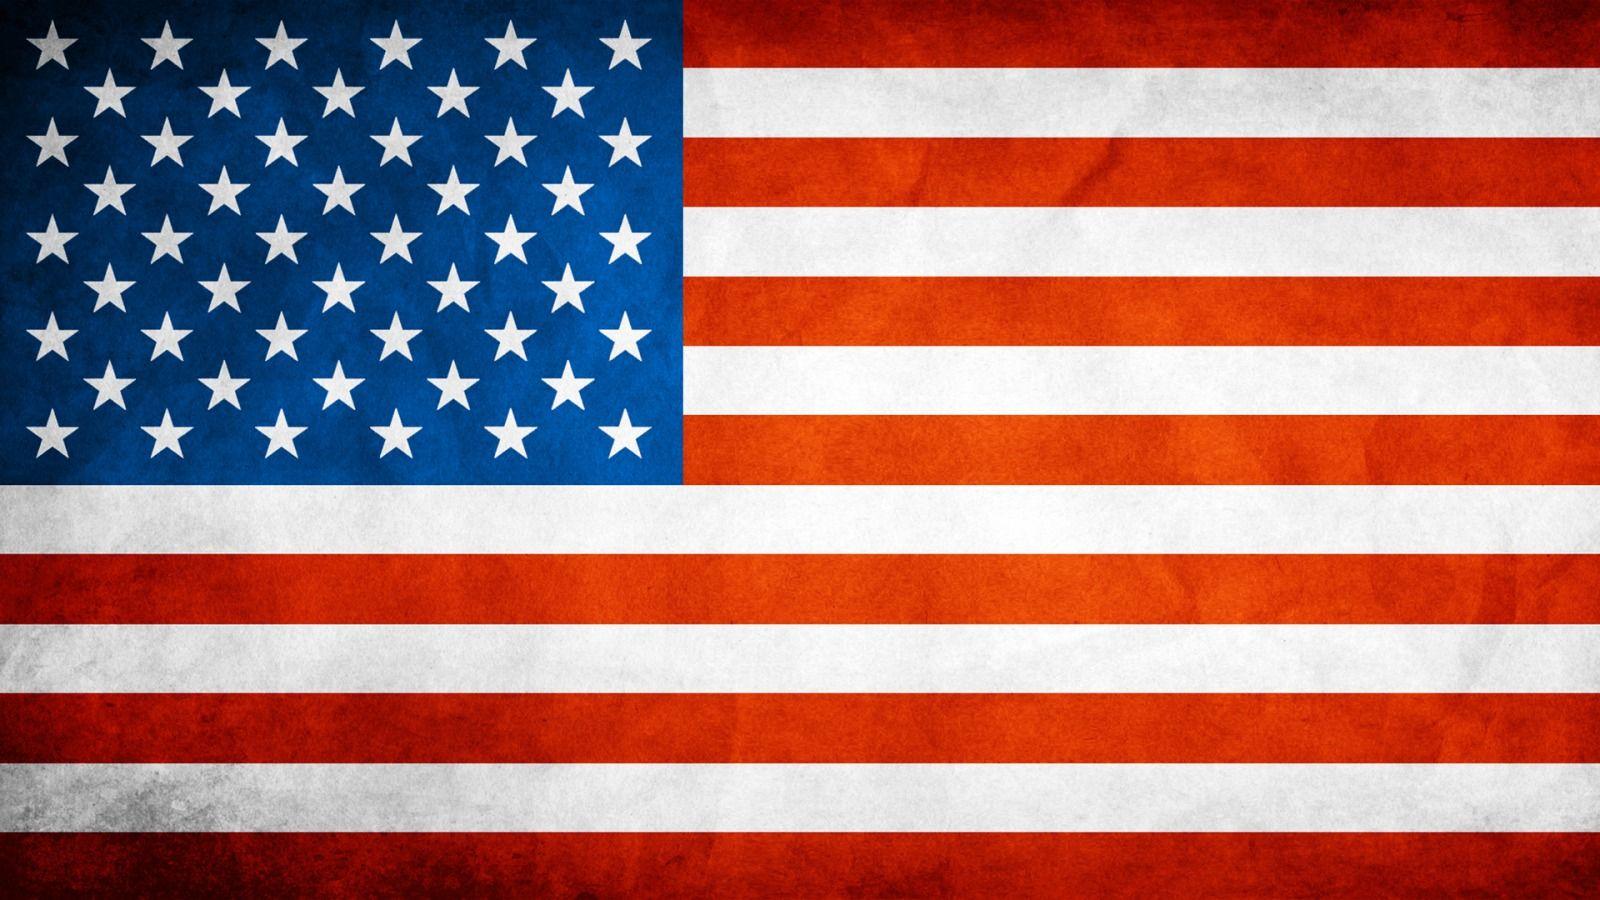 USA Flag Wallpaper United States World Wallpaper in jpg format